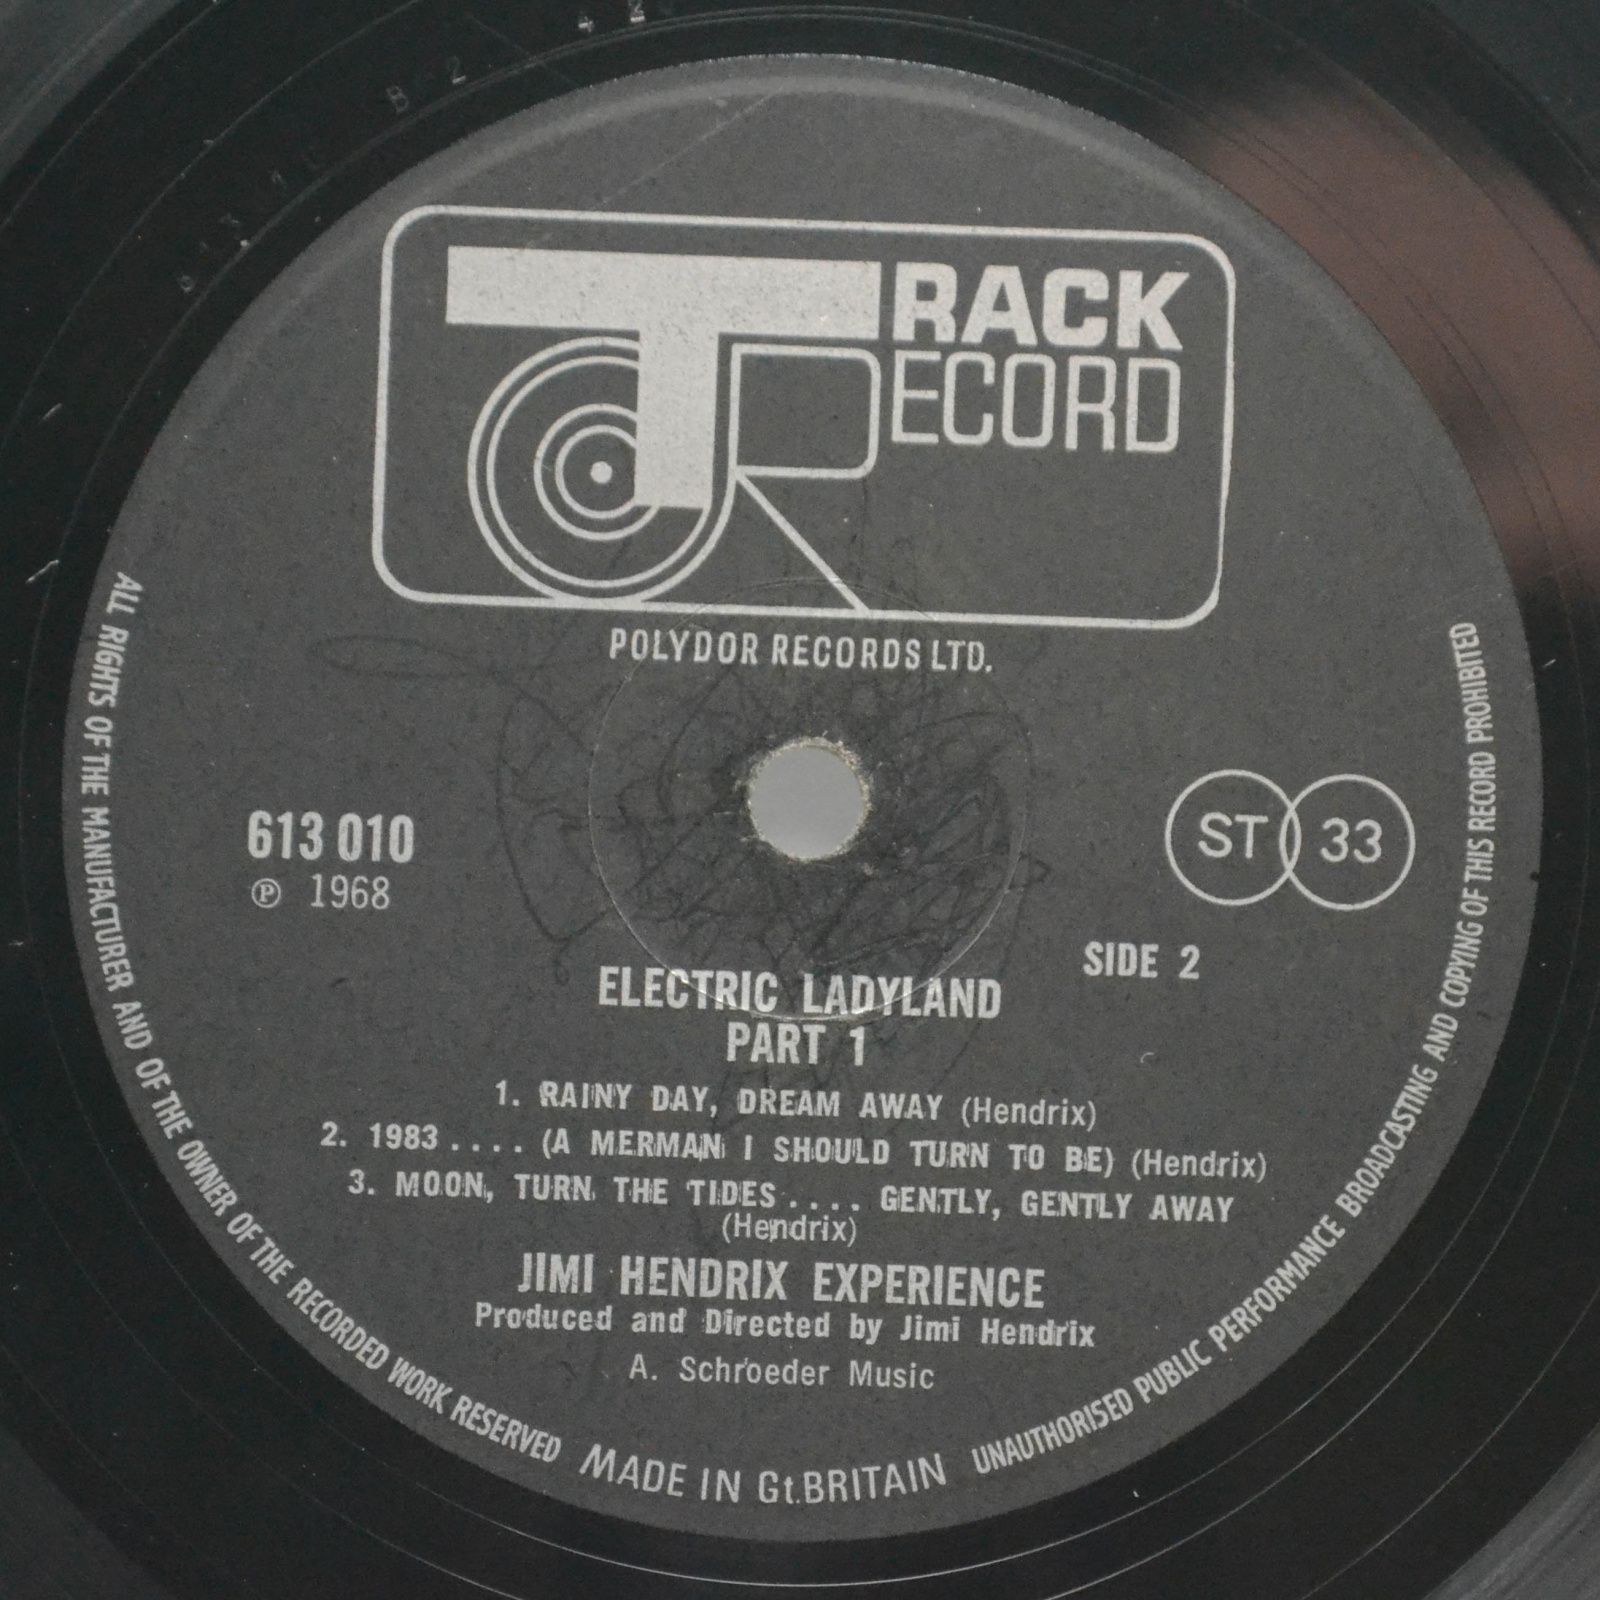 Jimi Hendrix Experience — Electric Ladyland Part 1 (UK), 1968